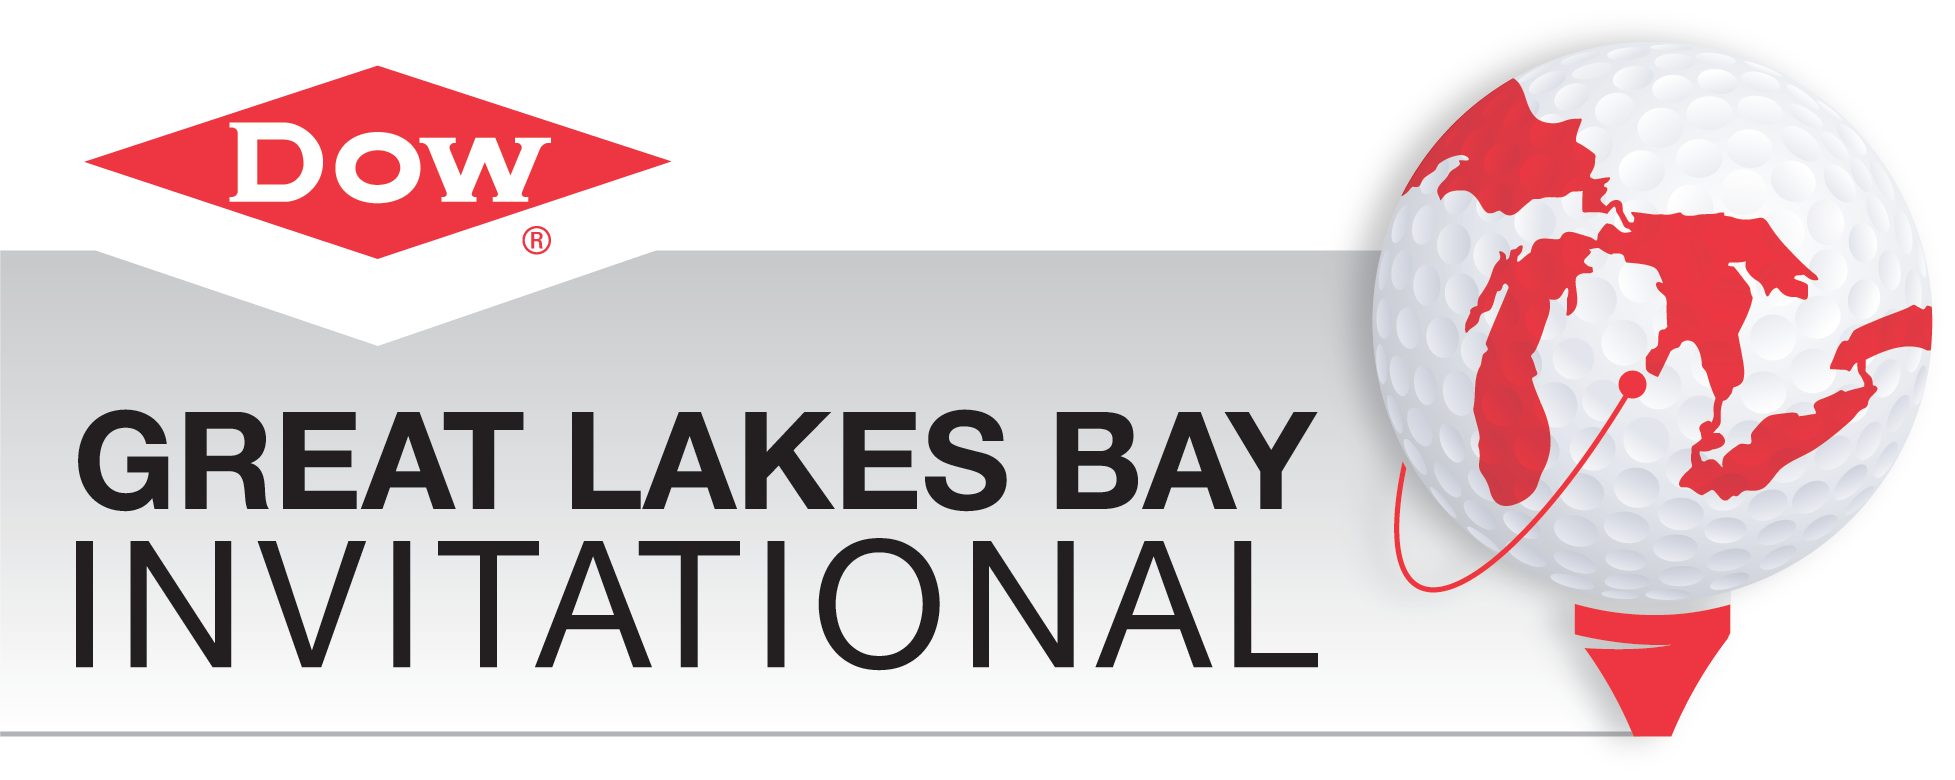 Dow Great Lakes Bay Invitational วันที่ 3